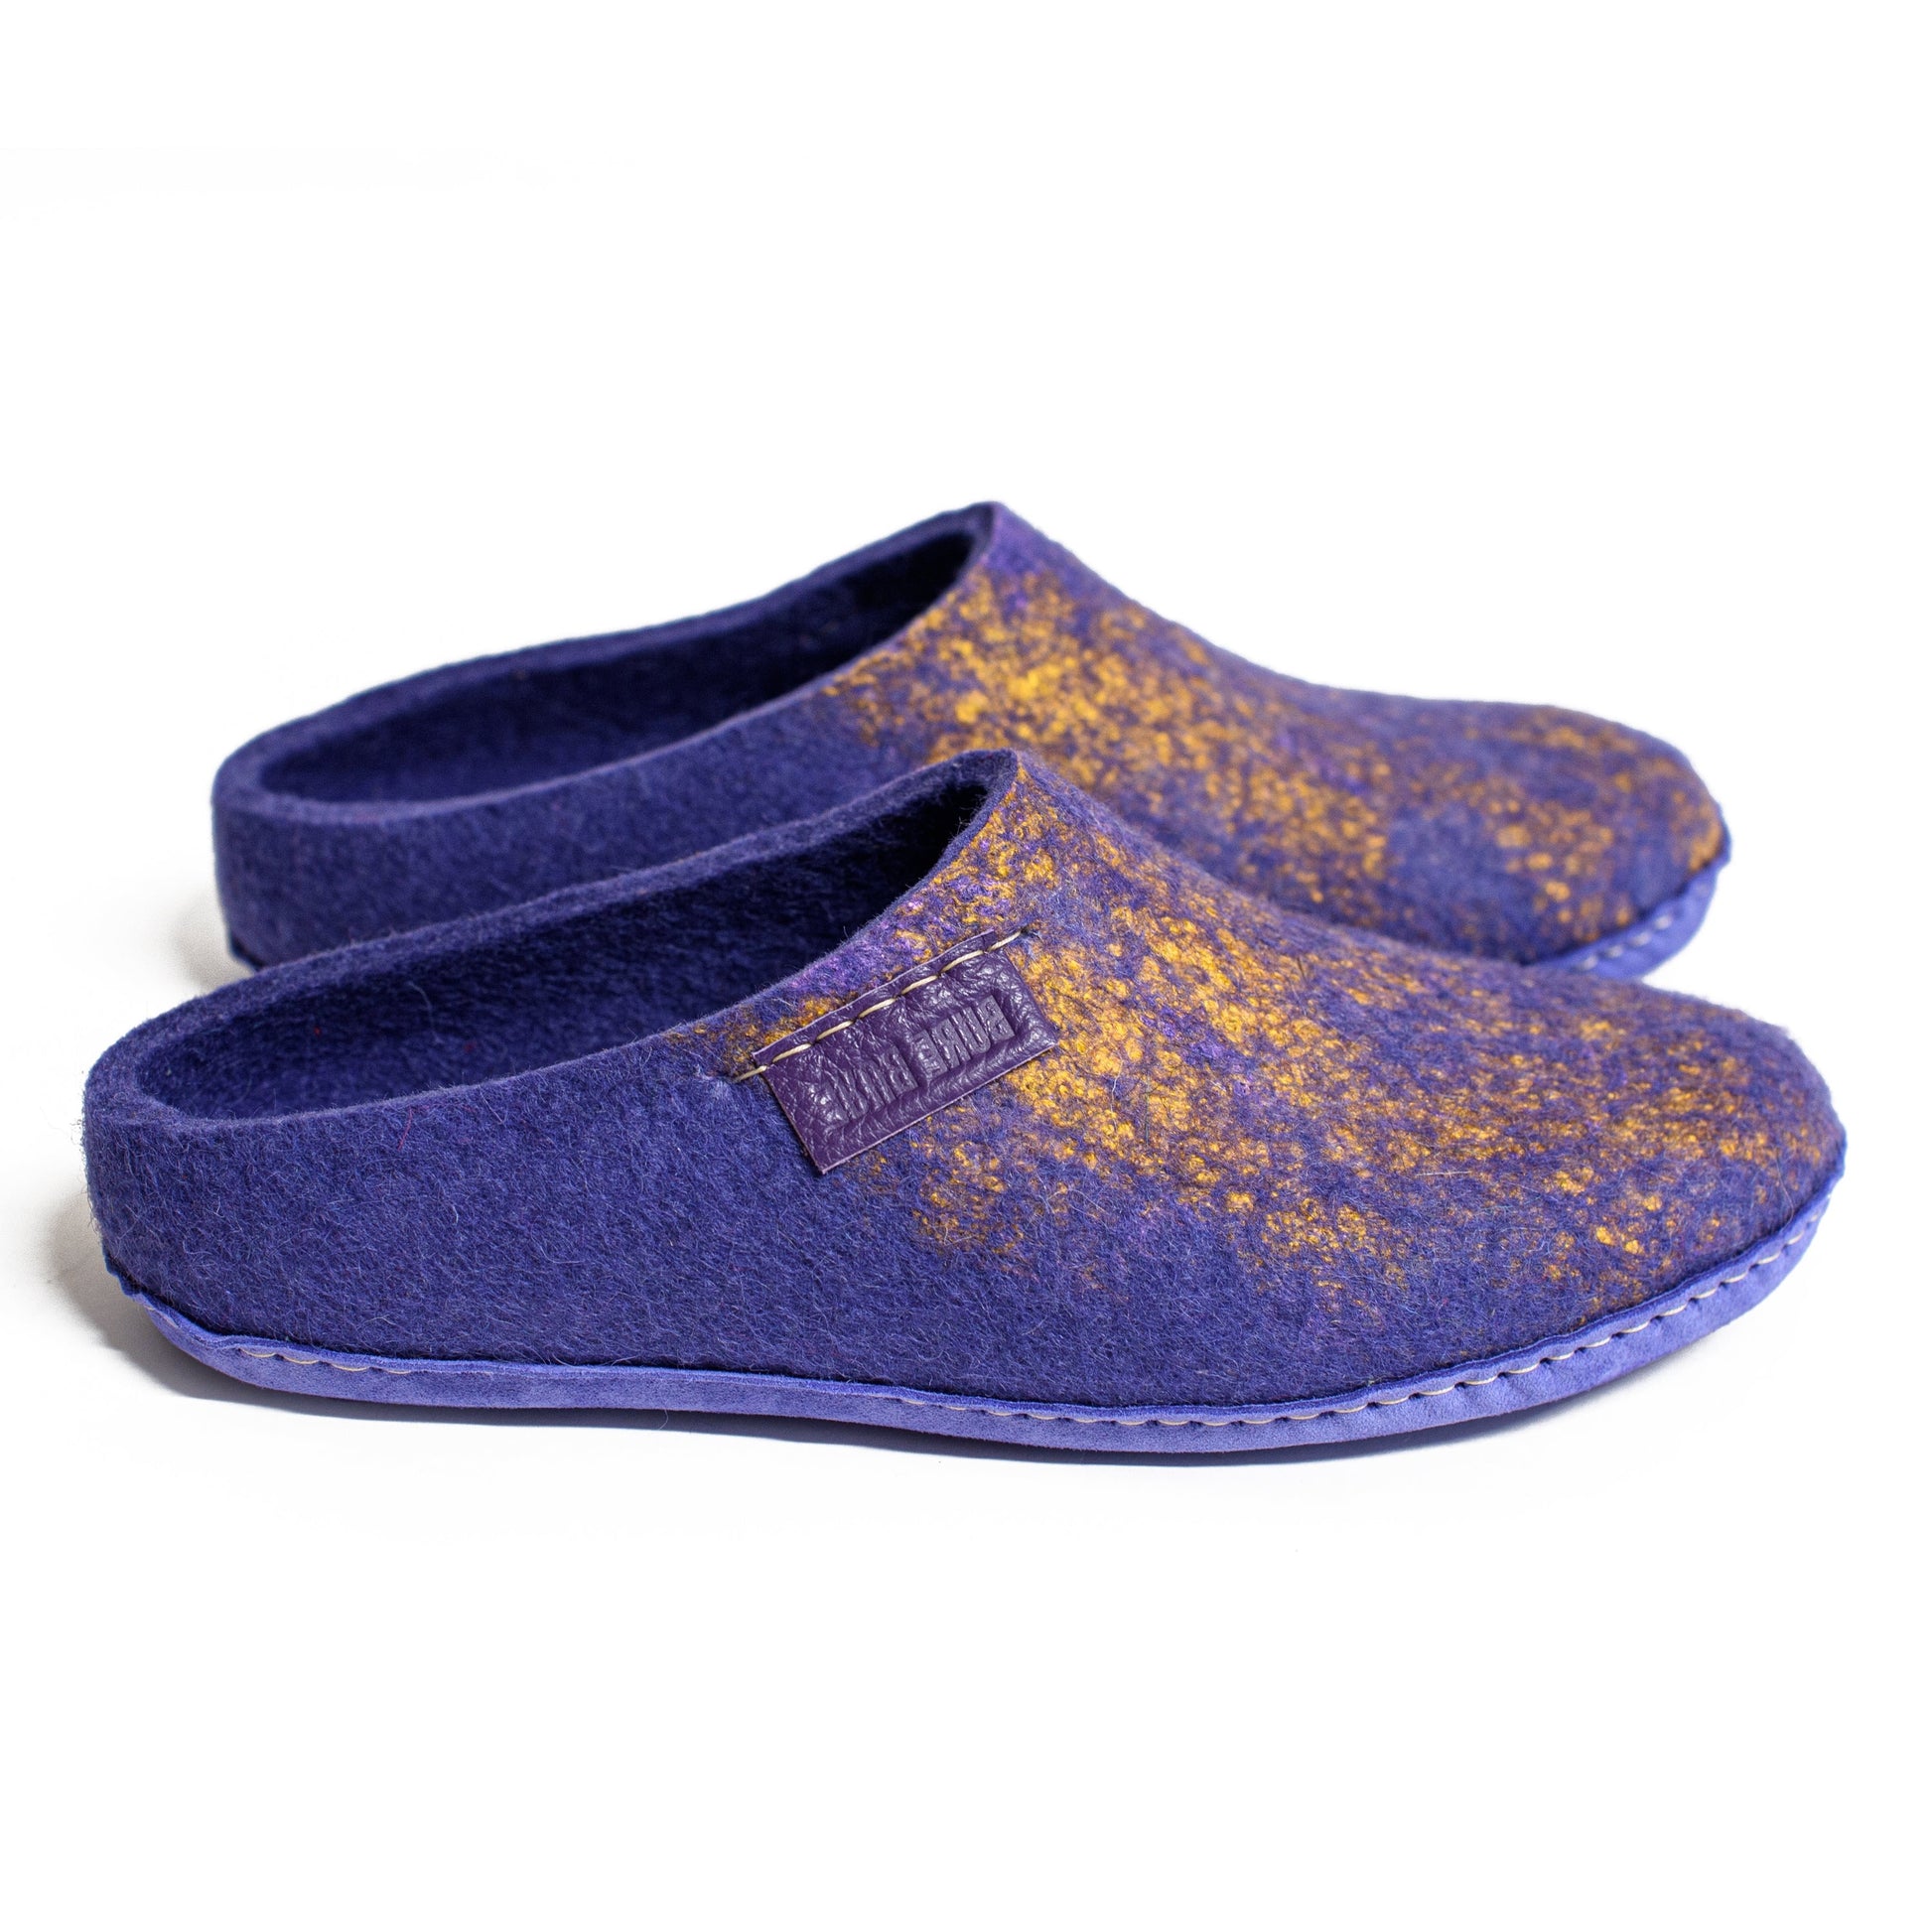 [felted_slippers],[wool_slippers], [burebure_slippers], [warm_wool_slippers], Semi-enclosed heel women's slippers SEMI-E, BureBure shoes and slippers